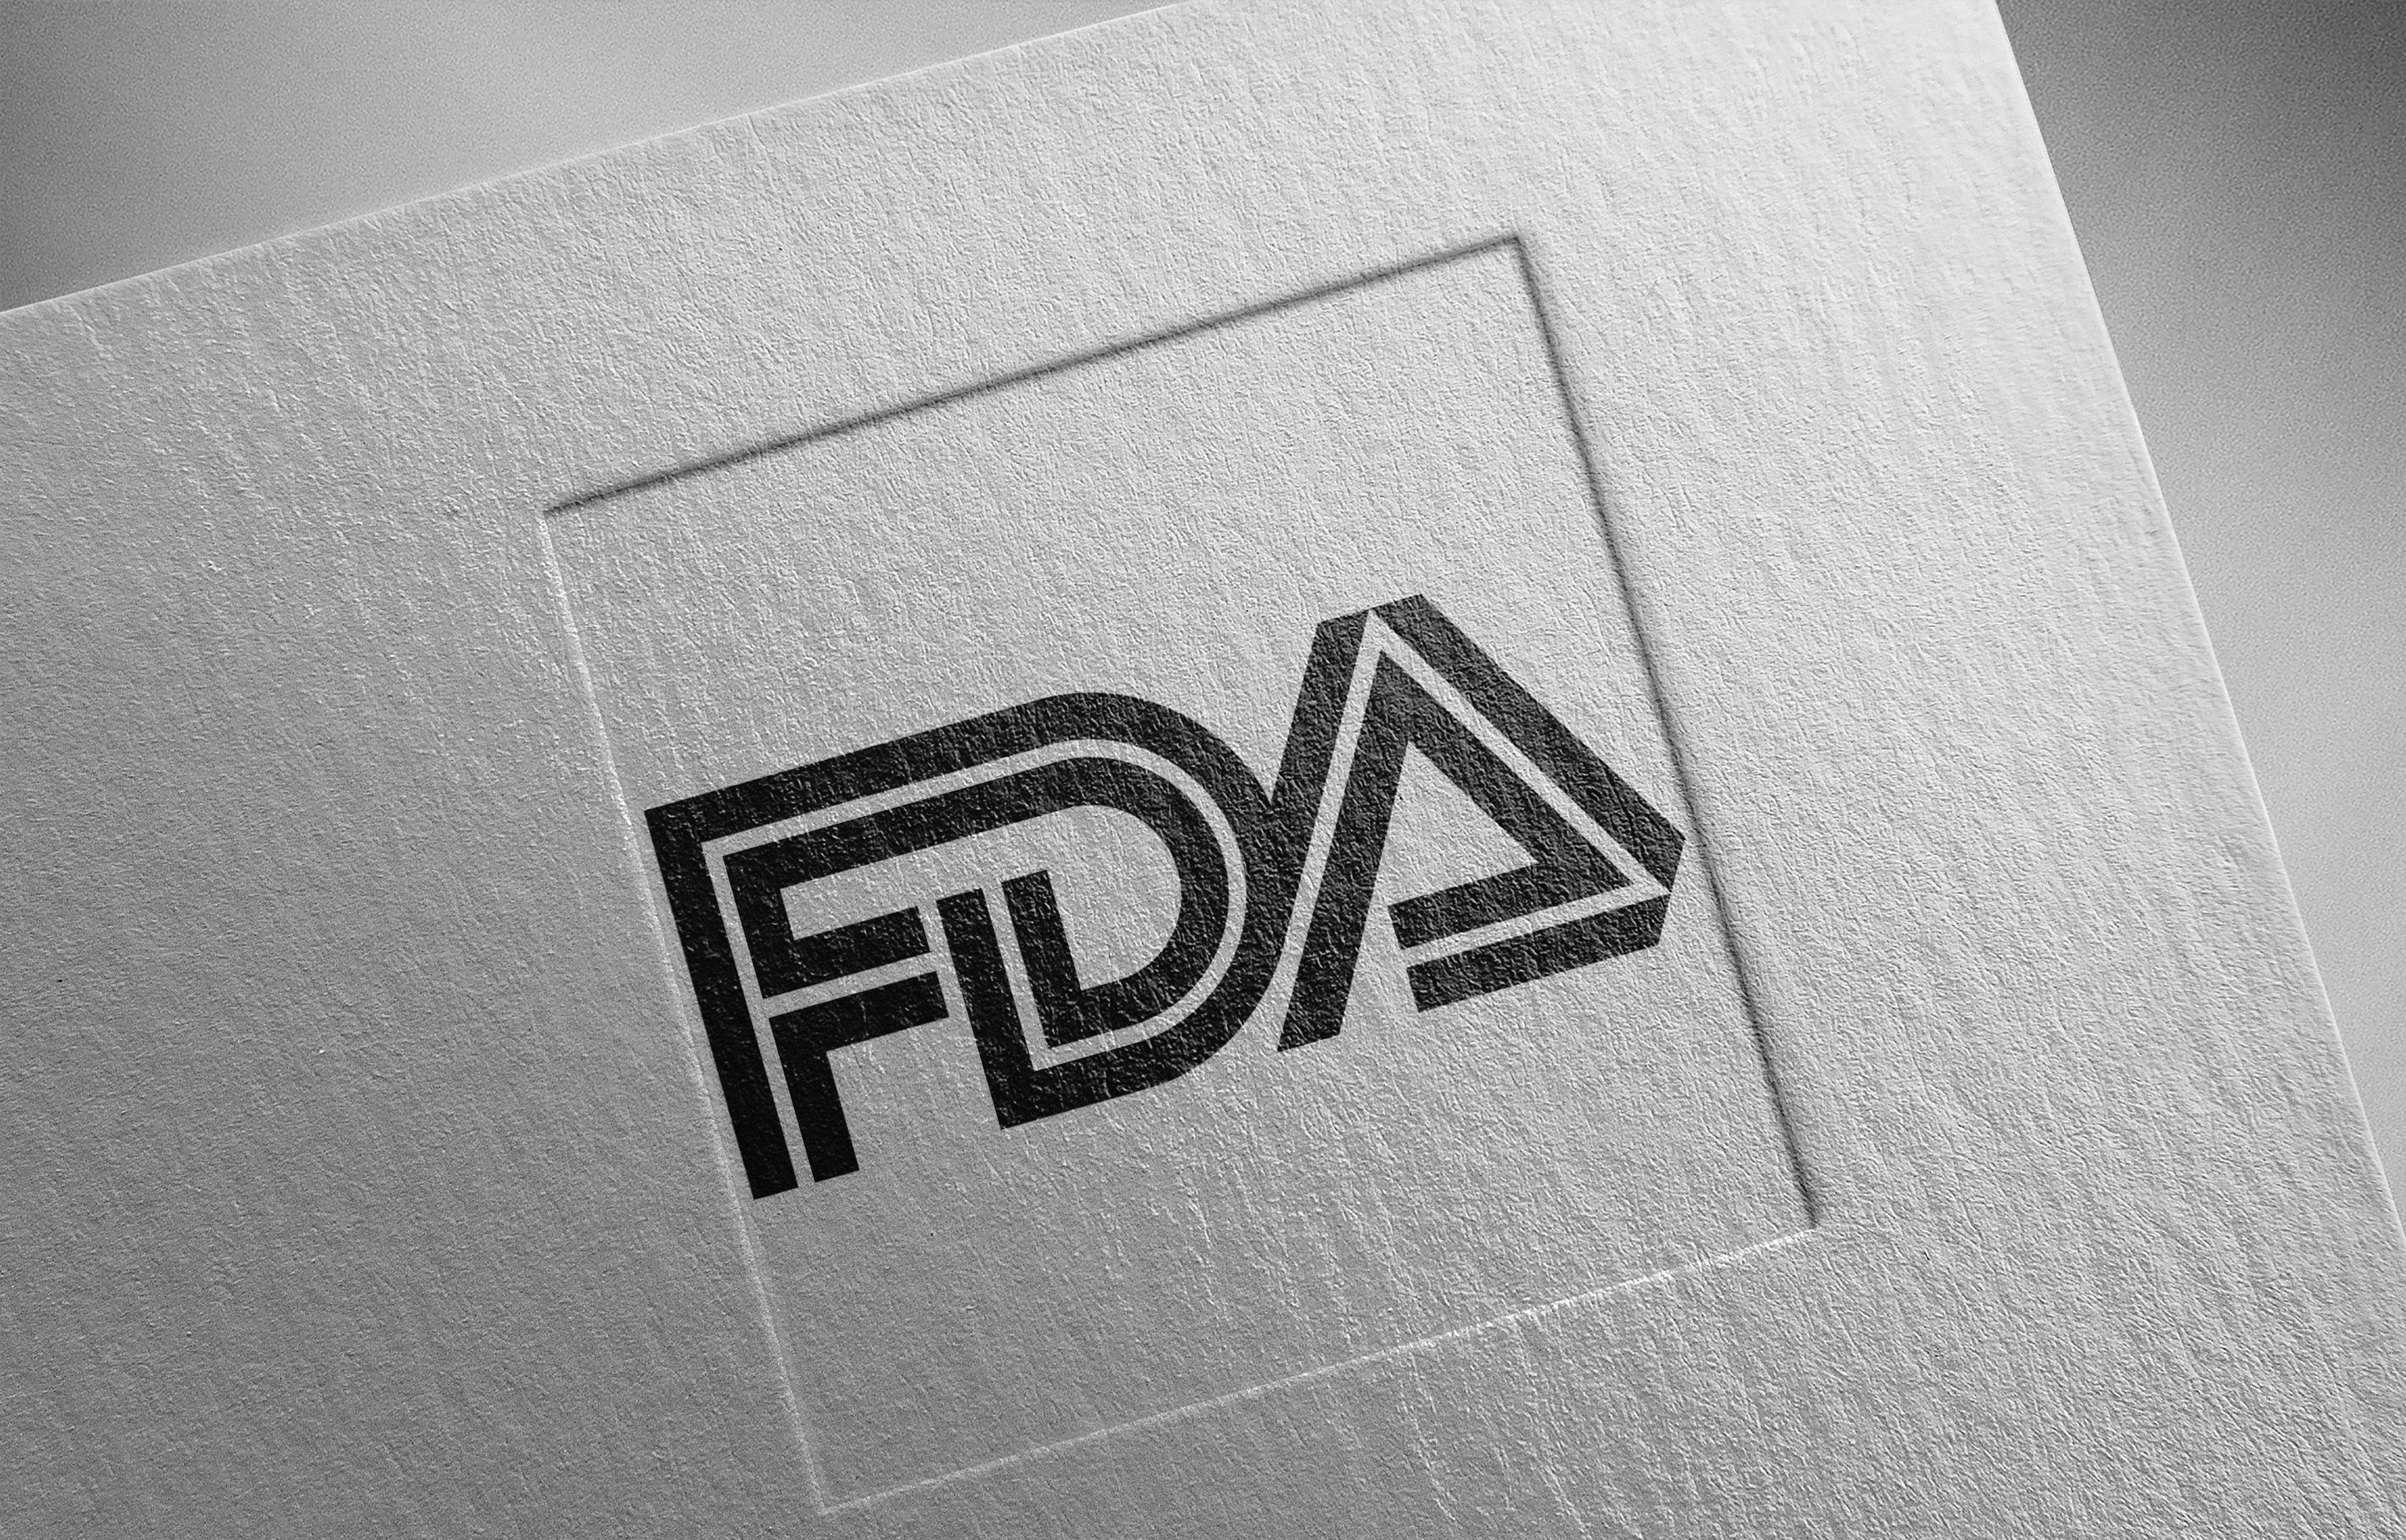 FDA sign on paper / Araki Illustrations - stock.adobe.com